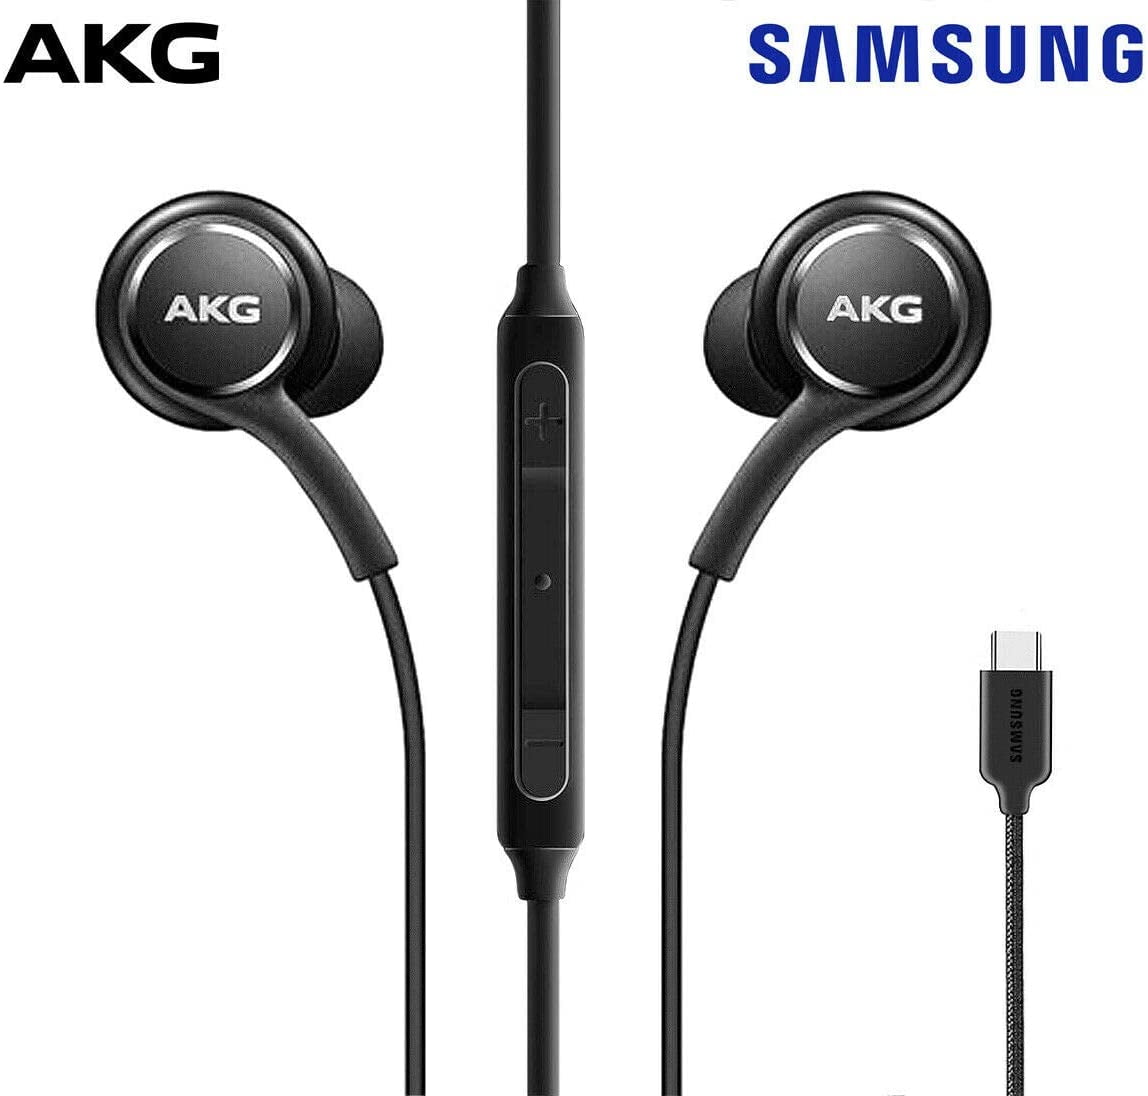 S10e S10+ SAMSUNG EO-IG955 AKG Earphones Headset Headphones for S10 5G 